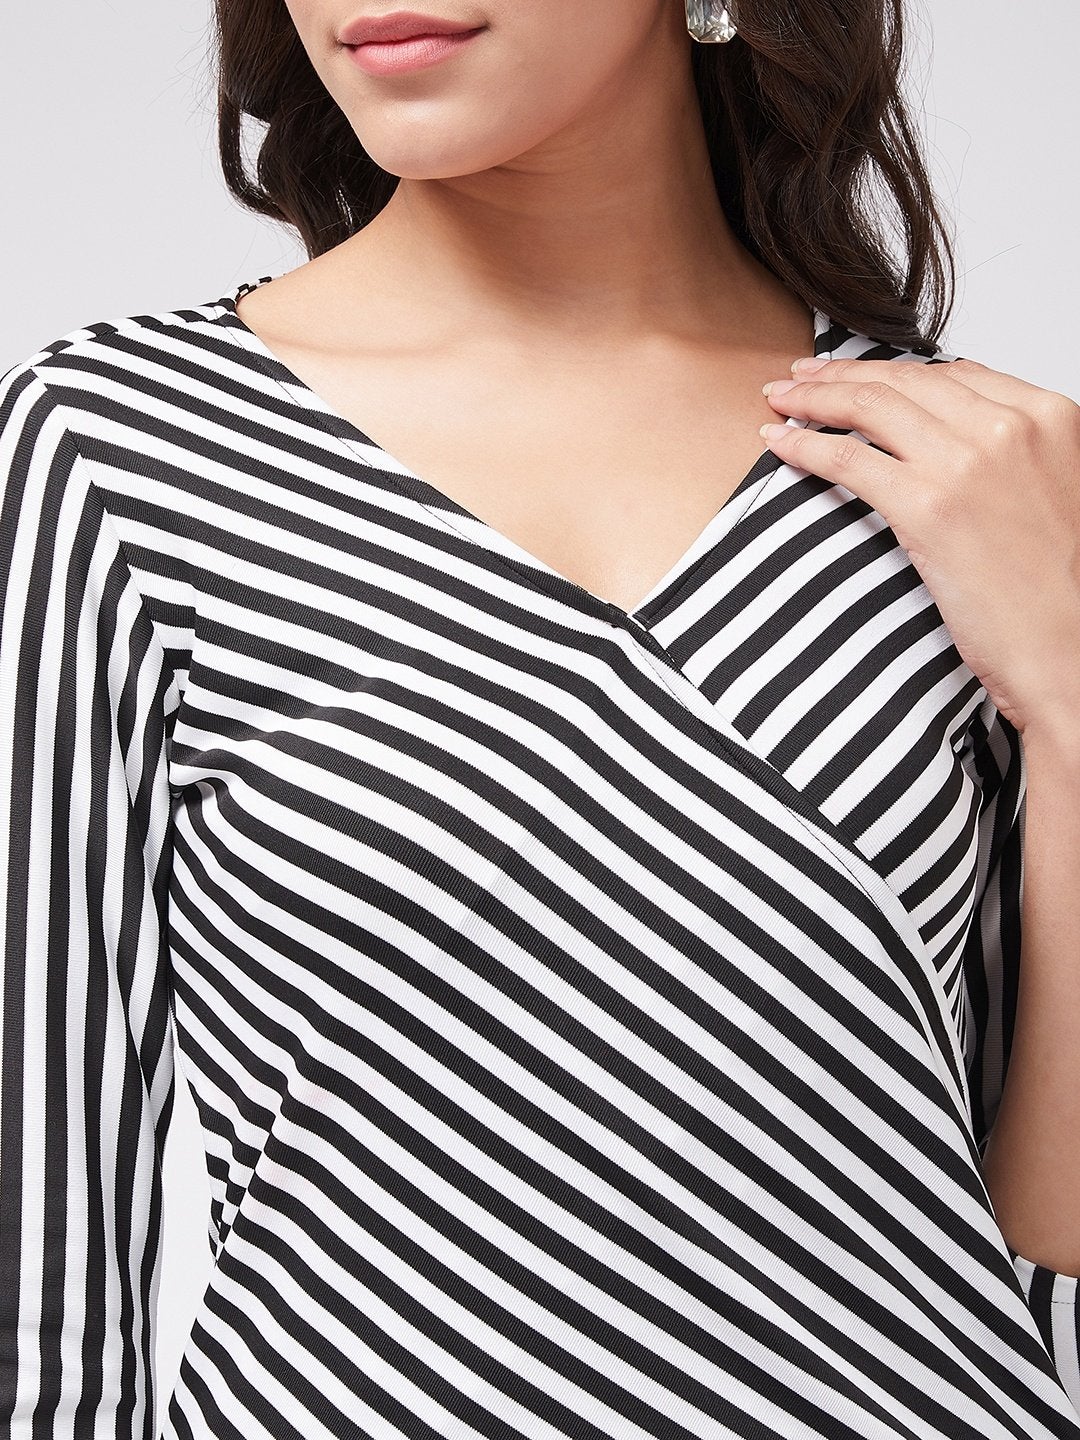 Women's Monocromatic Stripe Overlap Top - Pannkh